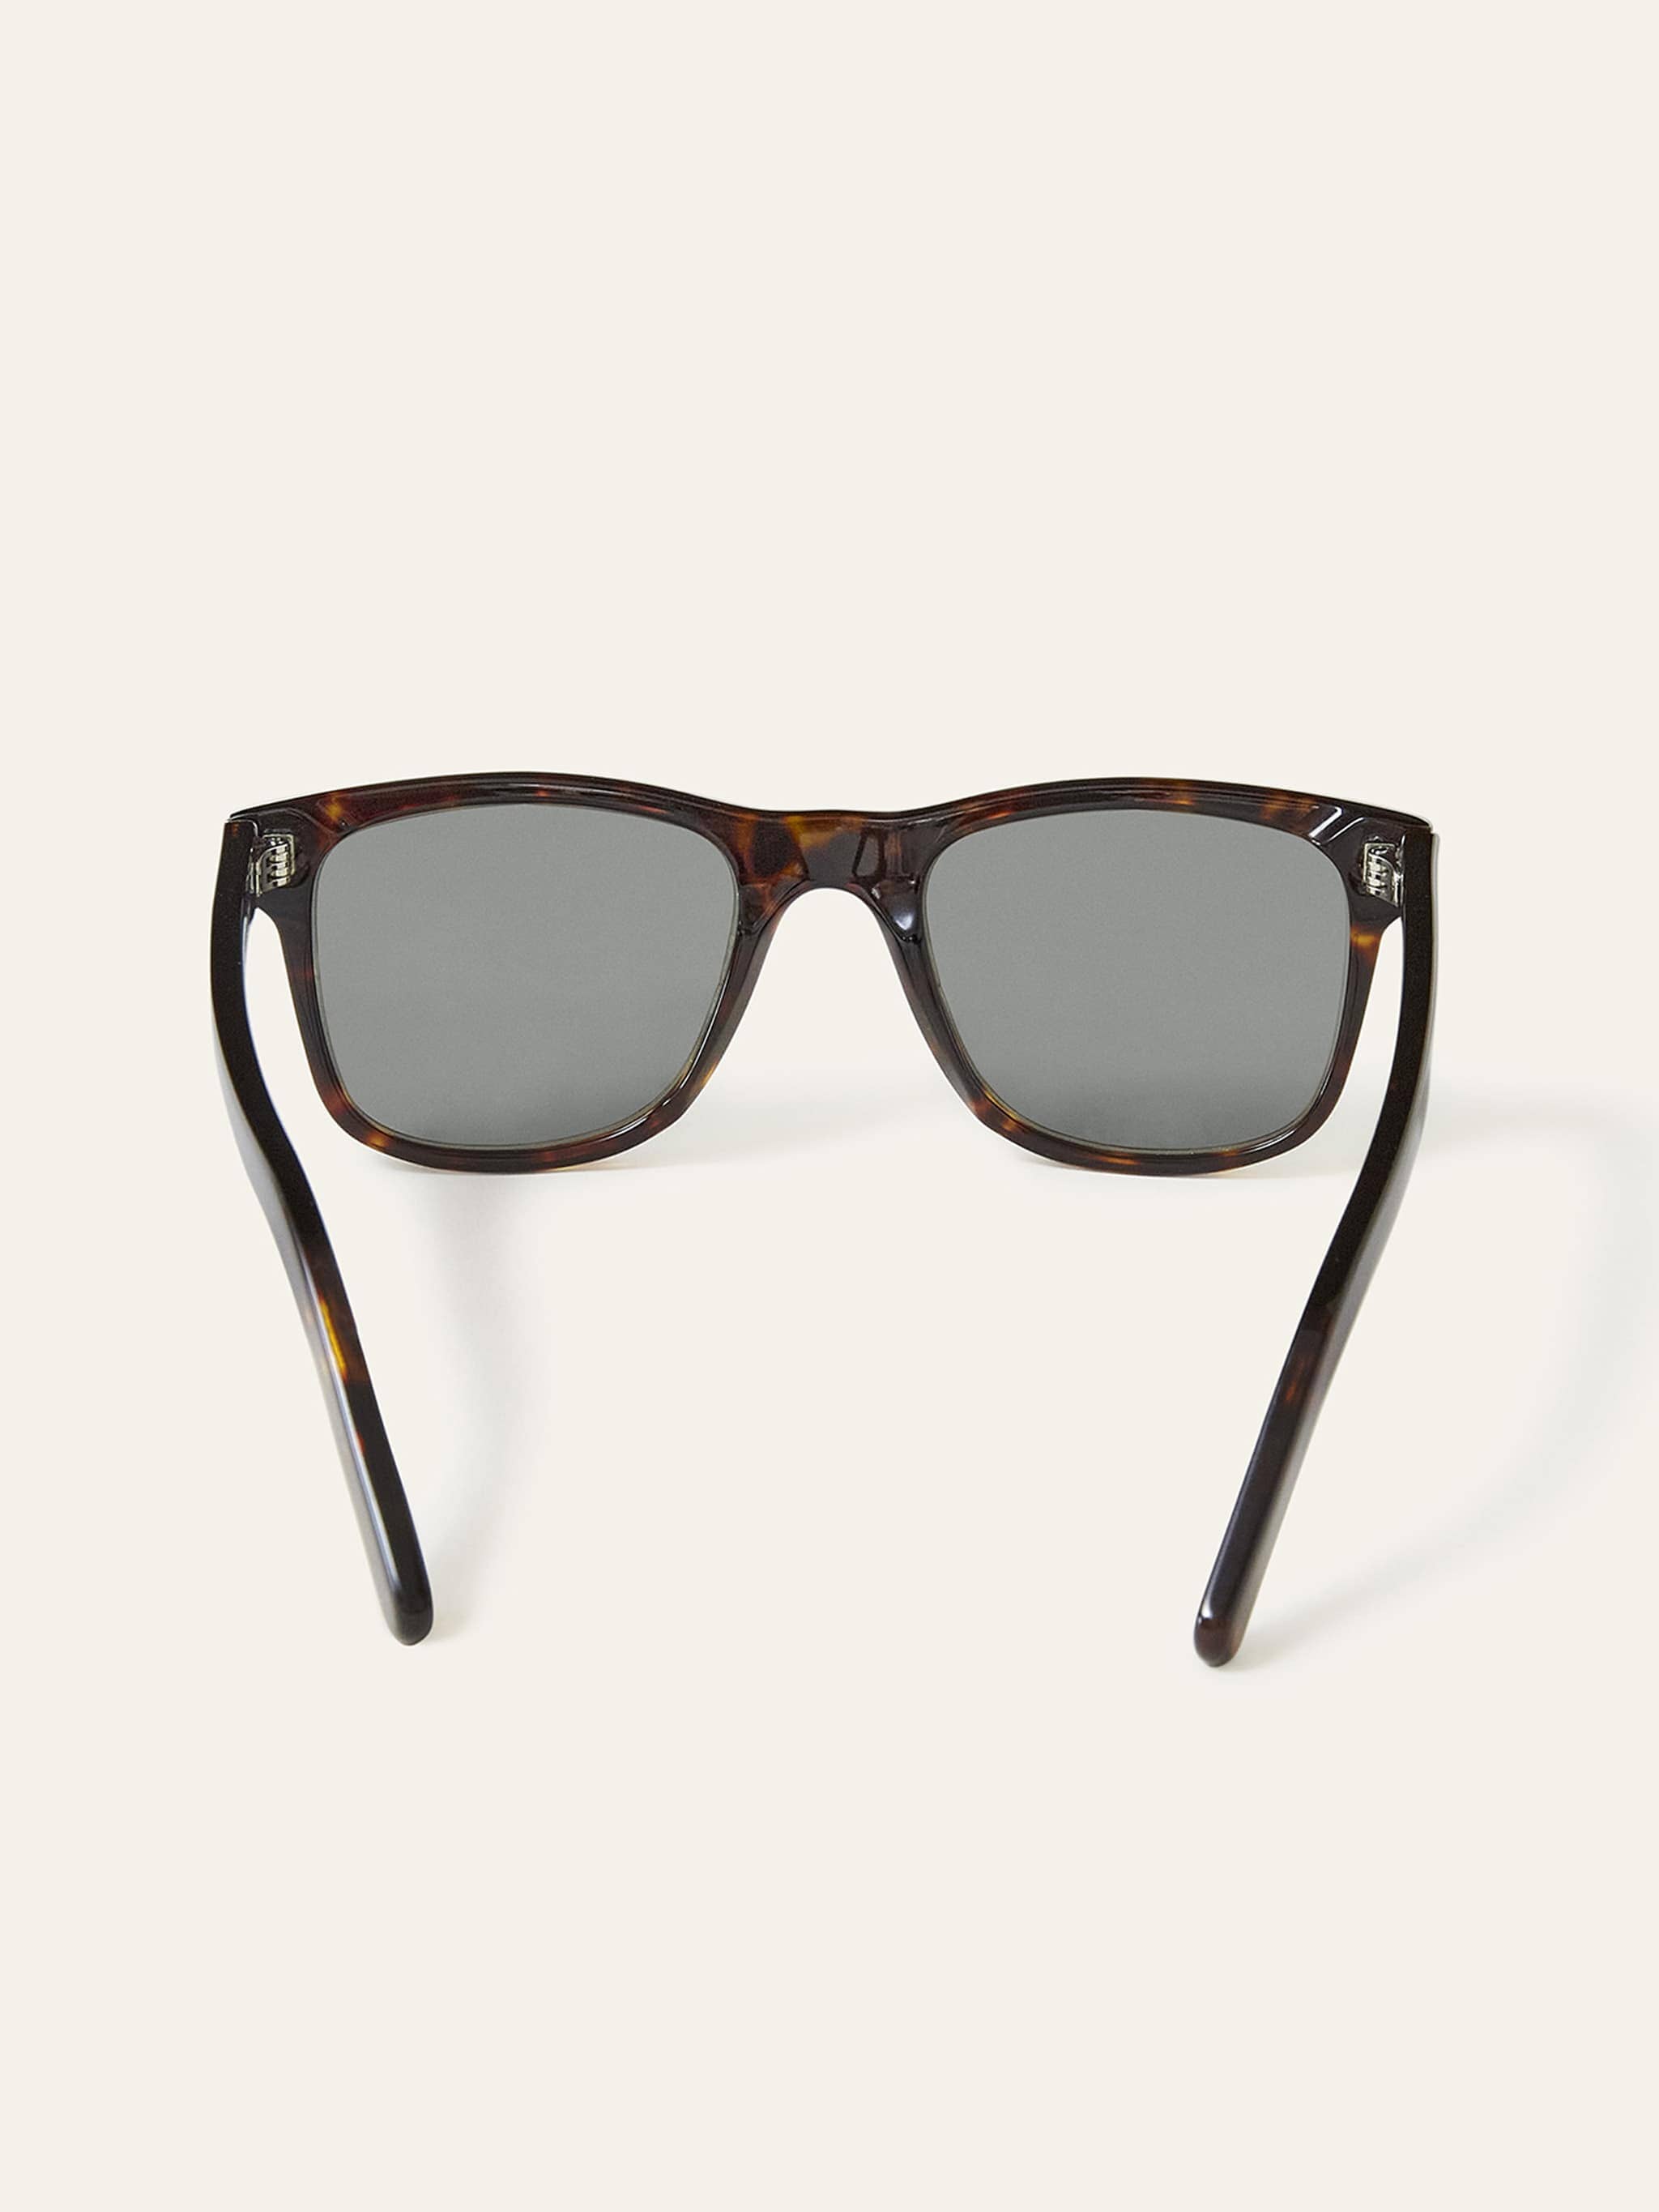 tortoiseshell-journey-sunglasses-957715.jpg